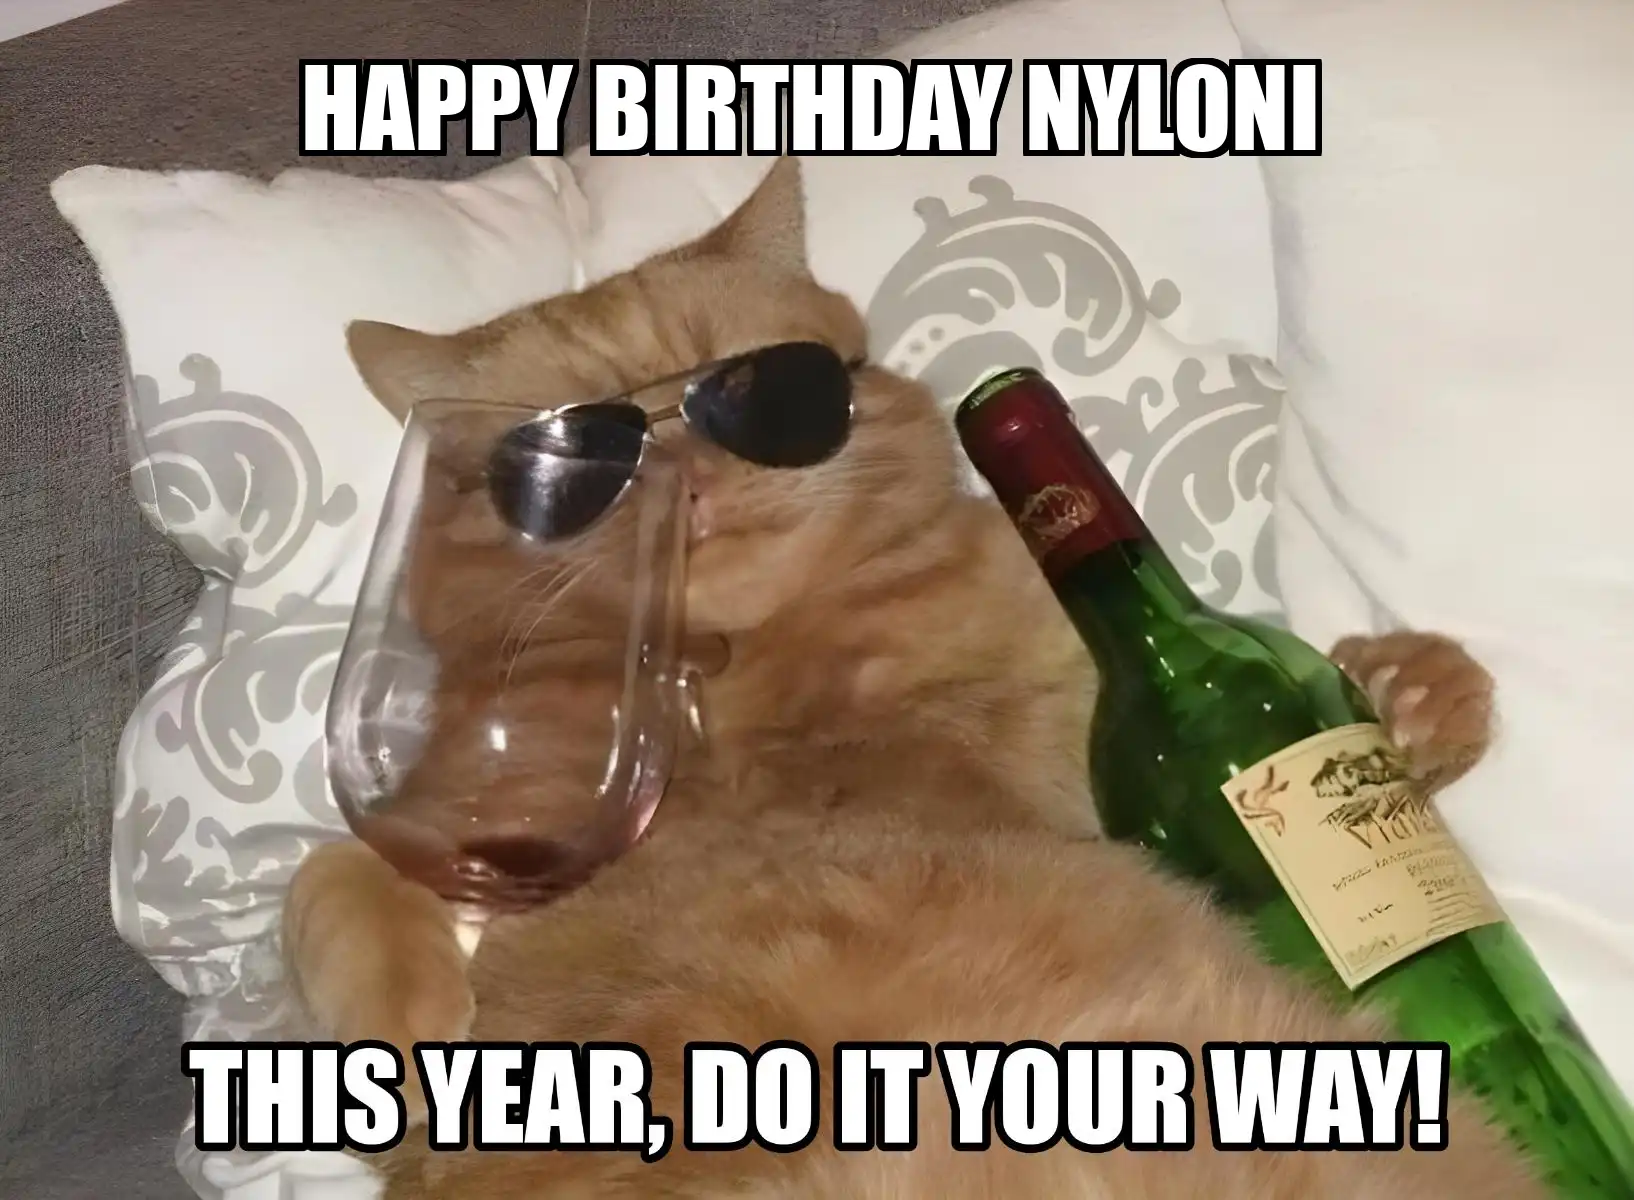 Happy Birthday Nyloni This Year Do It Your Way Meme